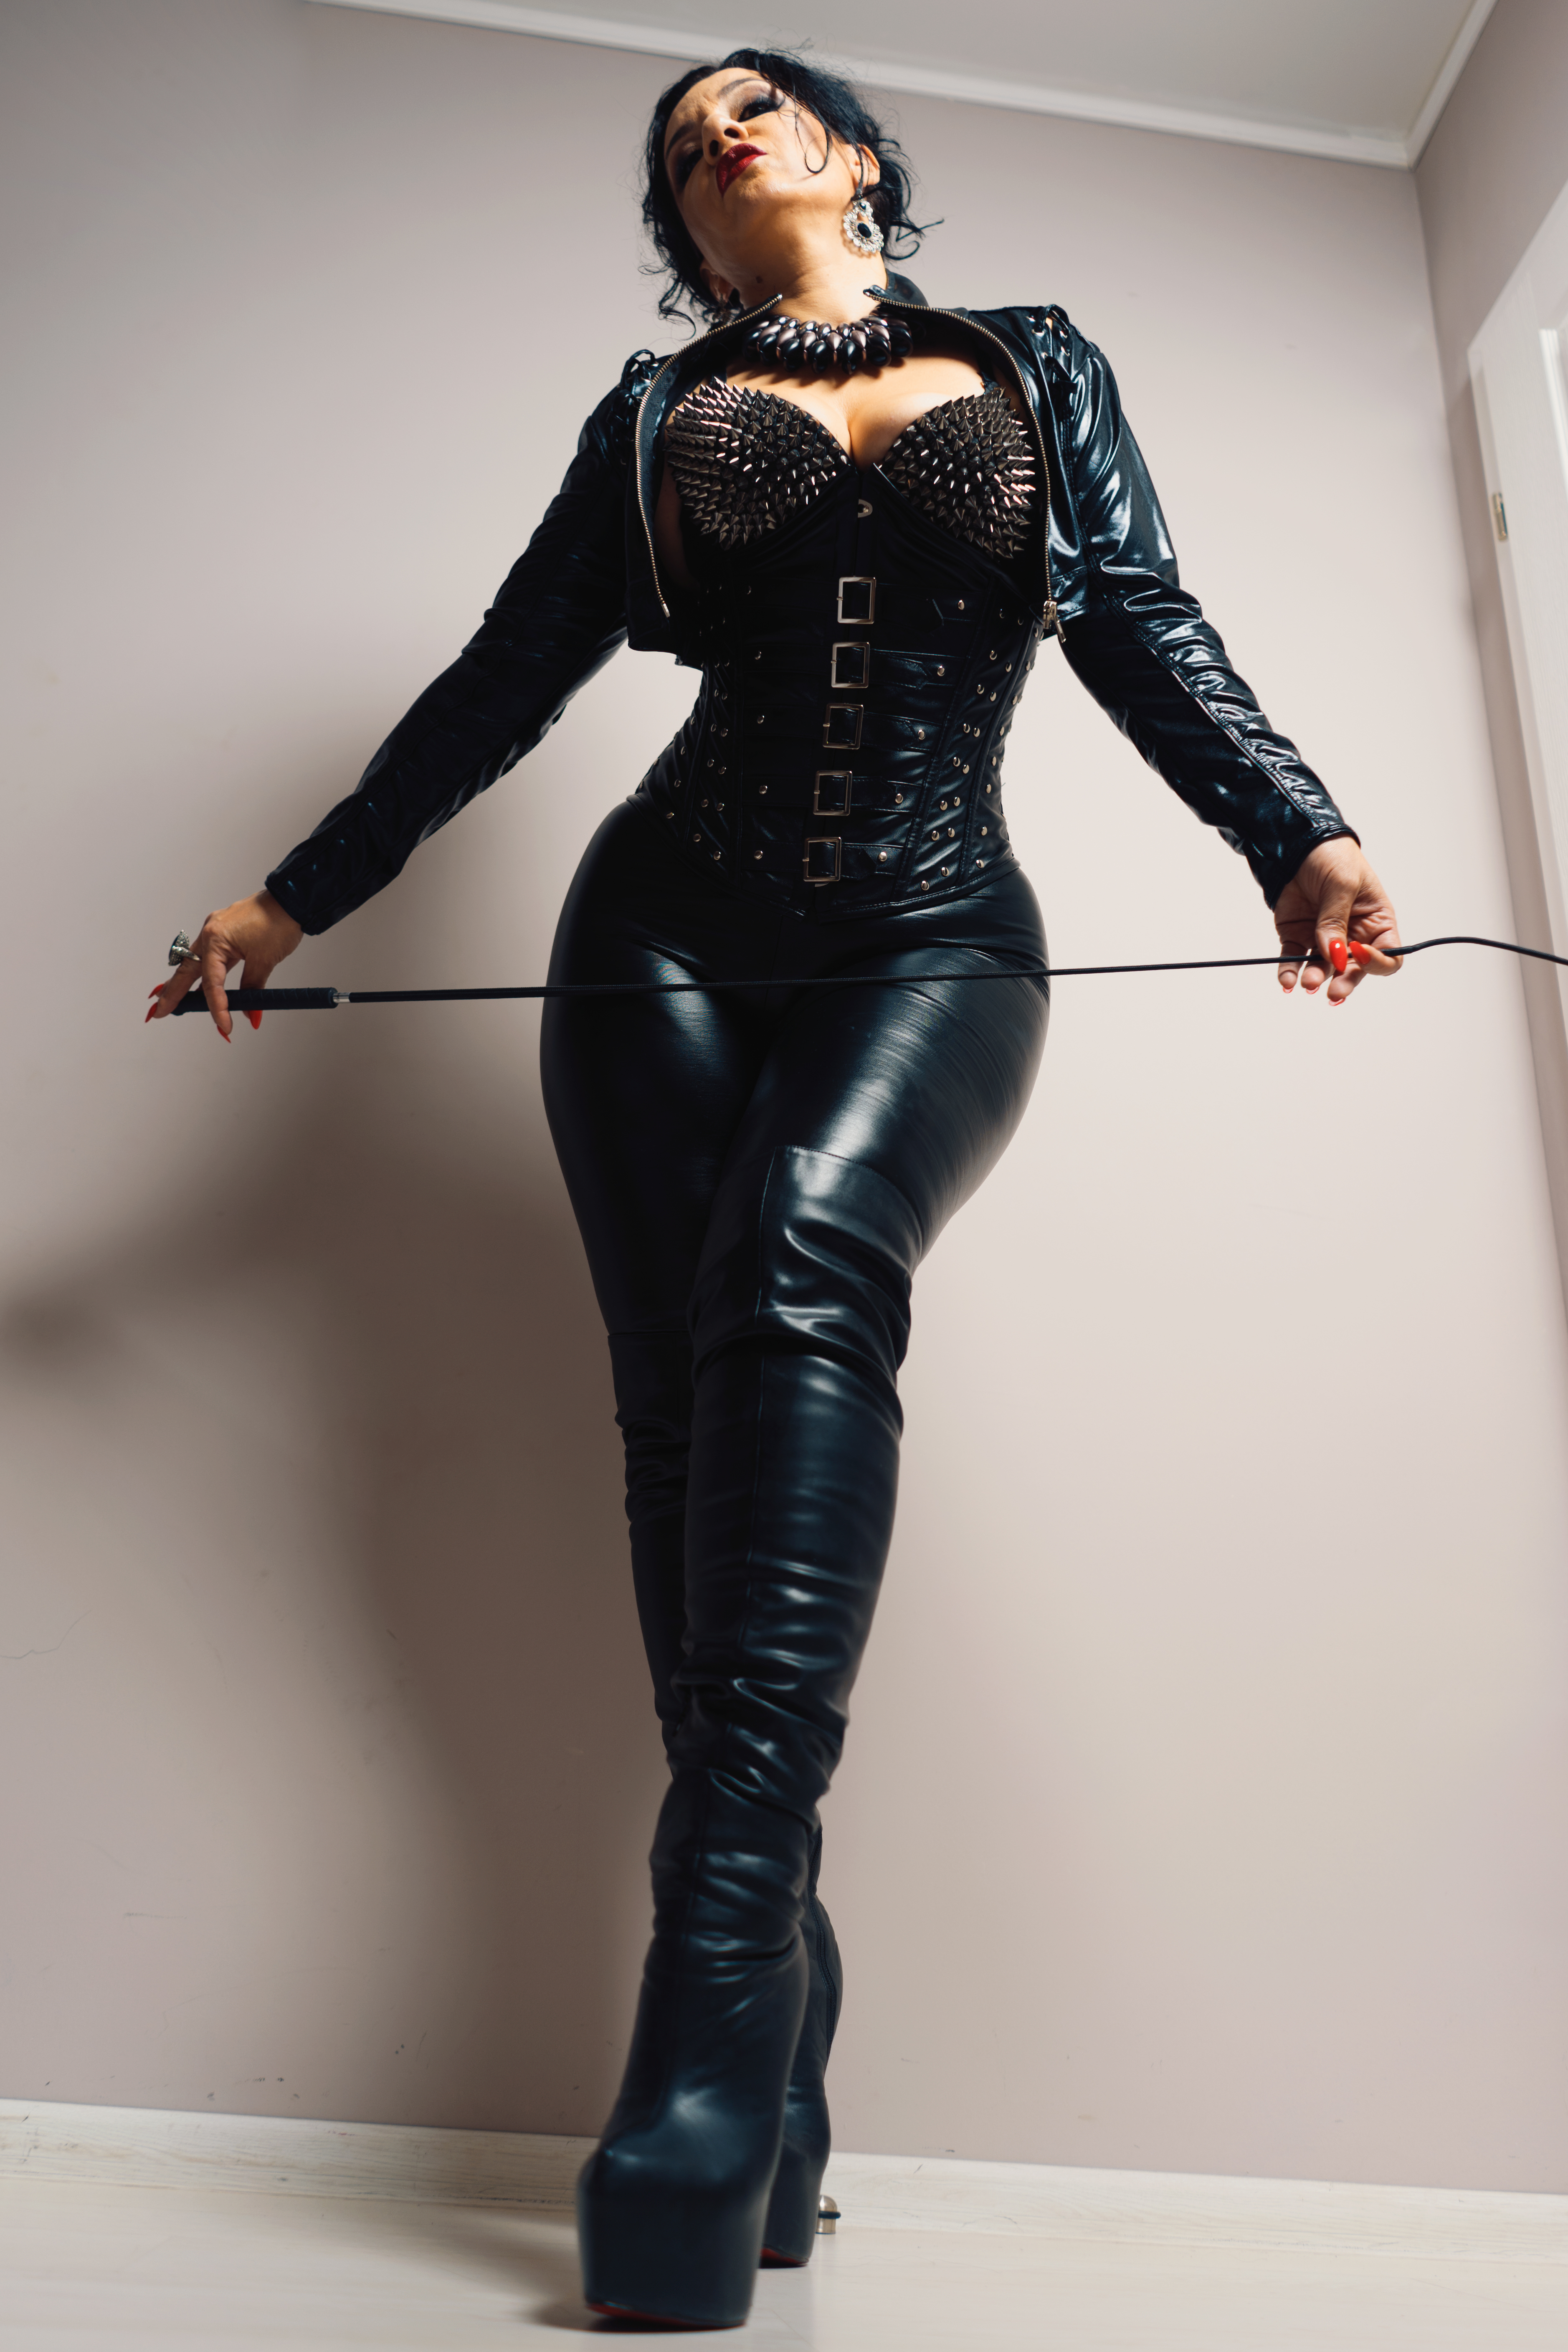 Mistress Luna in leather